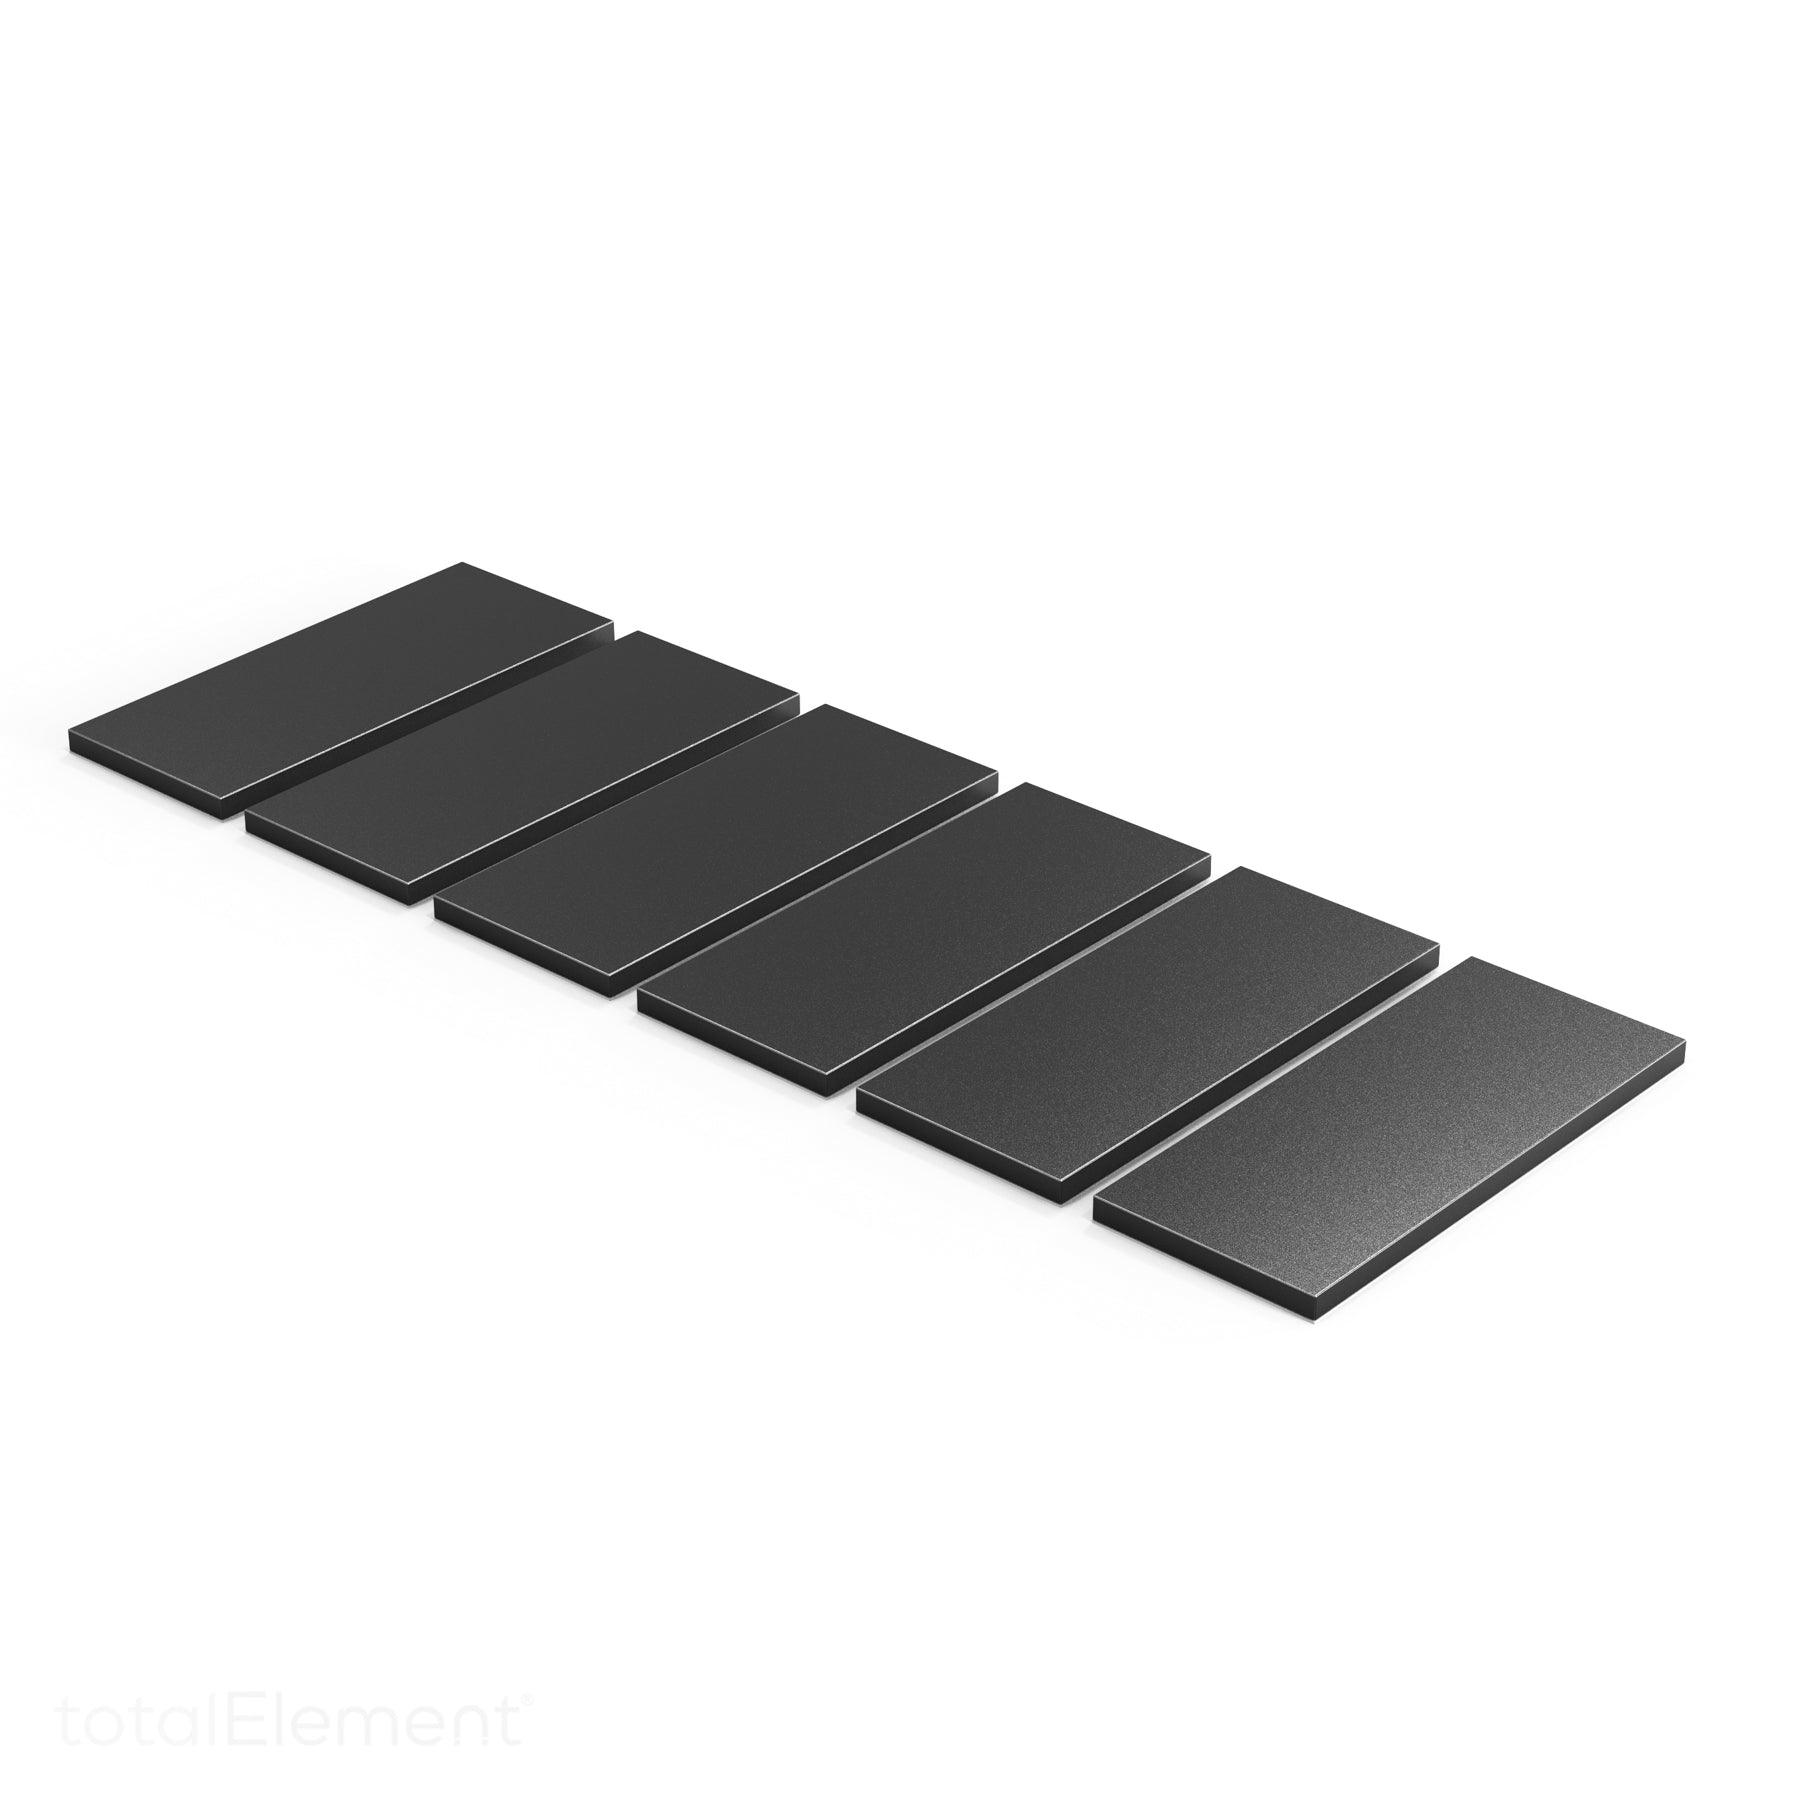 1.75 x 0.75 Inch Flexible Self-Adhesive Magnetic Strips, Premium